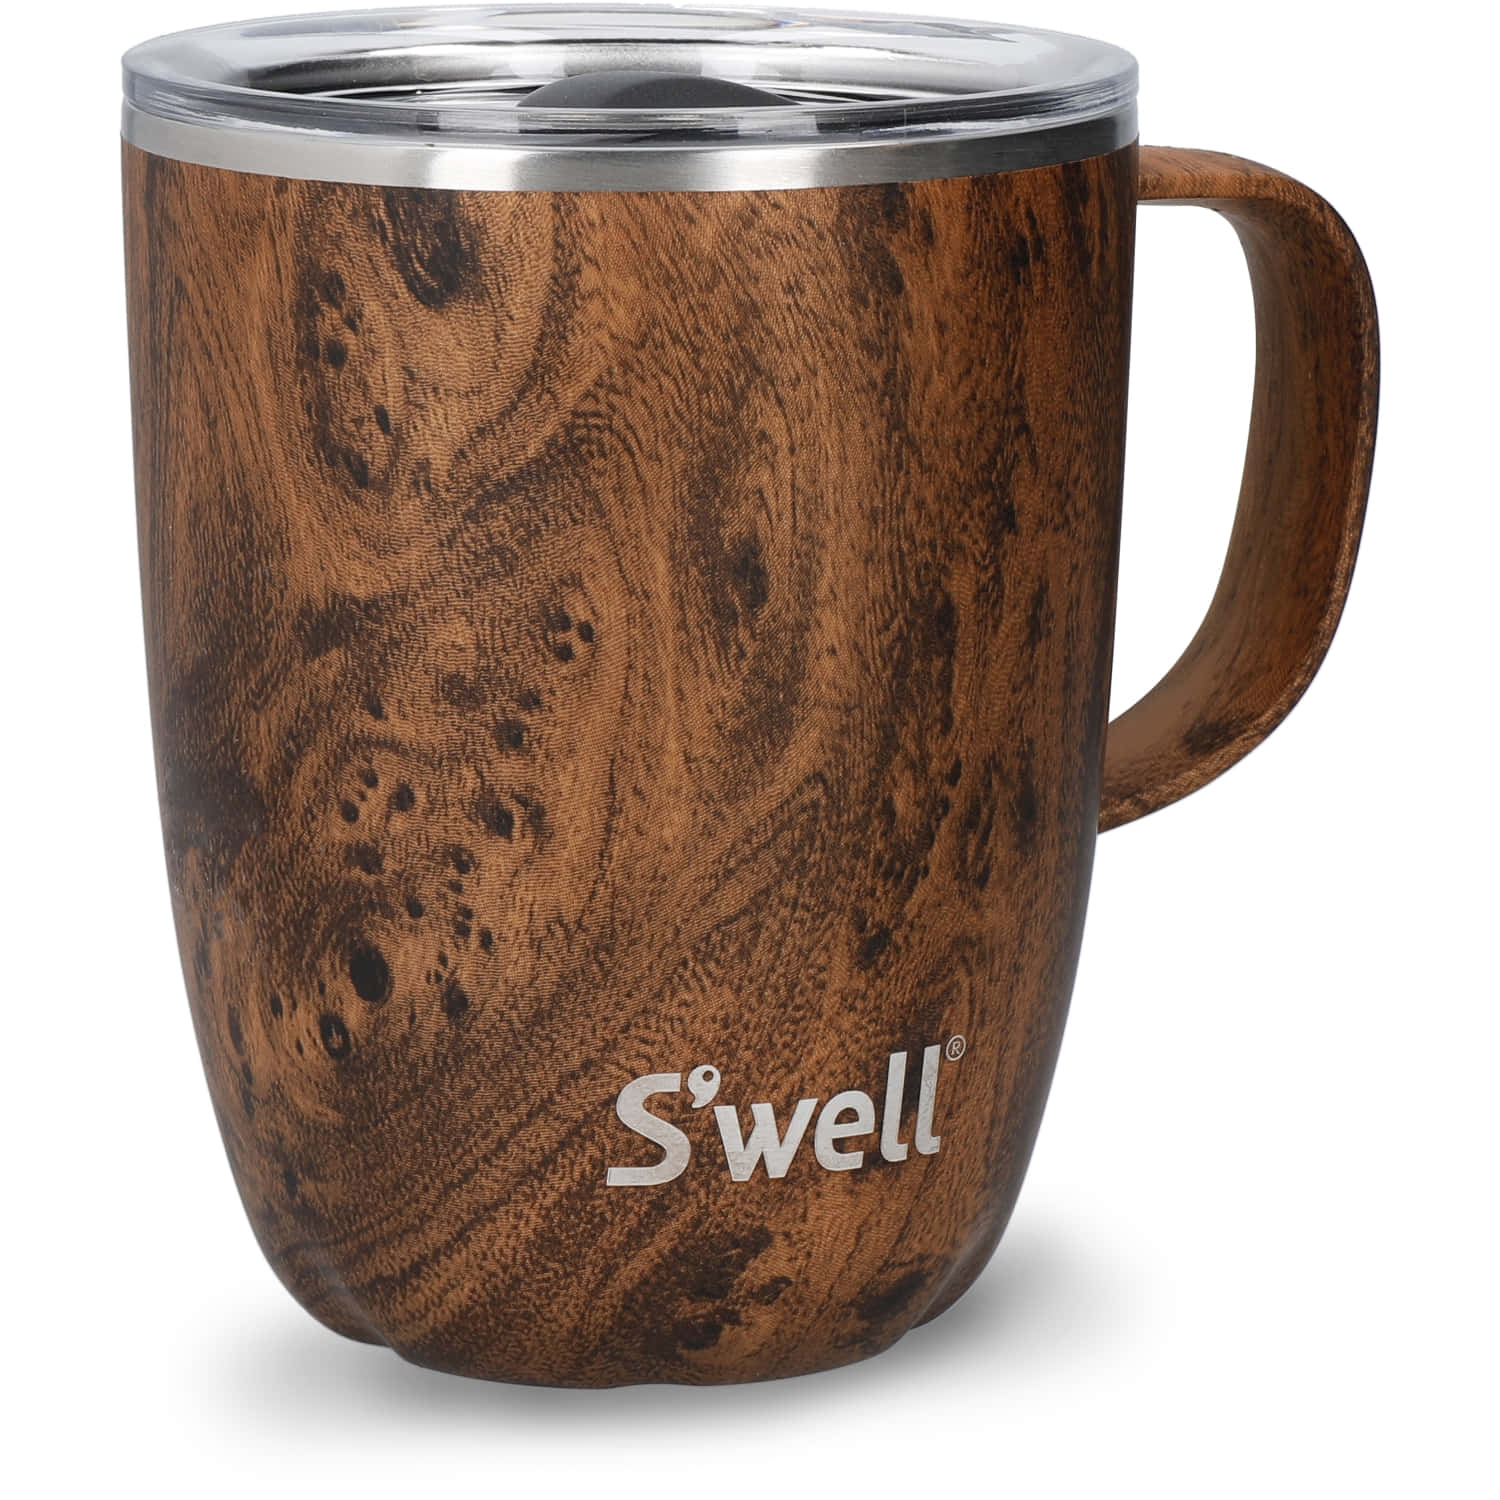 S'well Teakwood - Mug 350ml